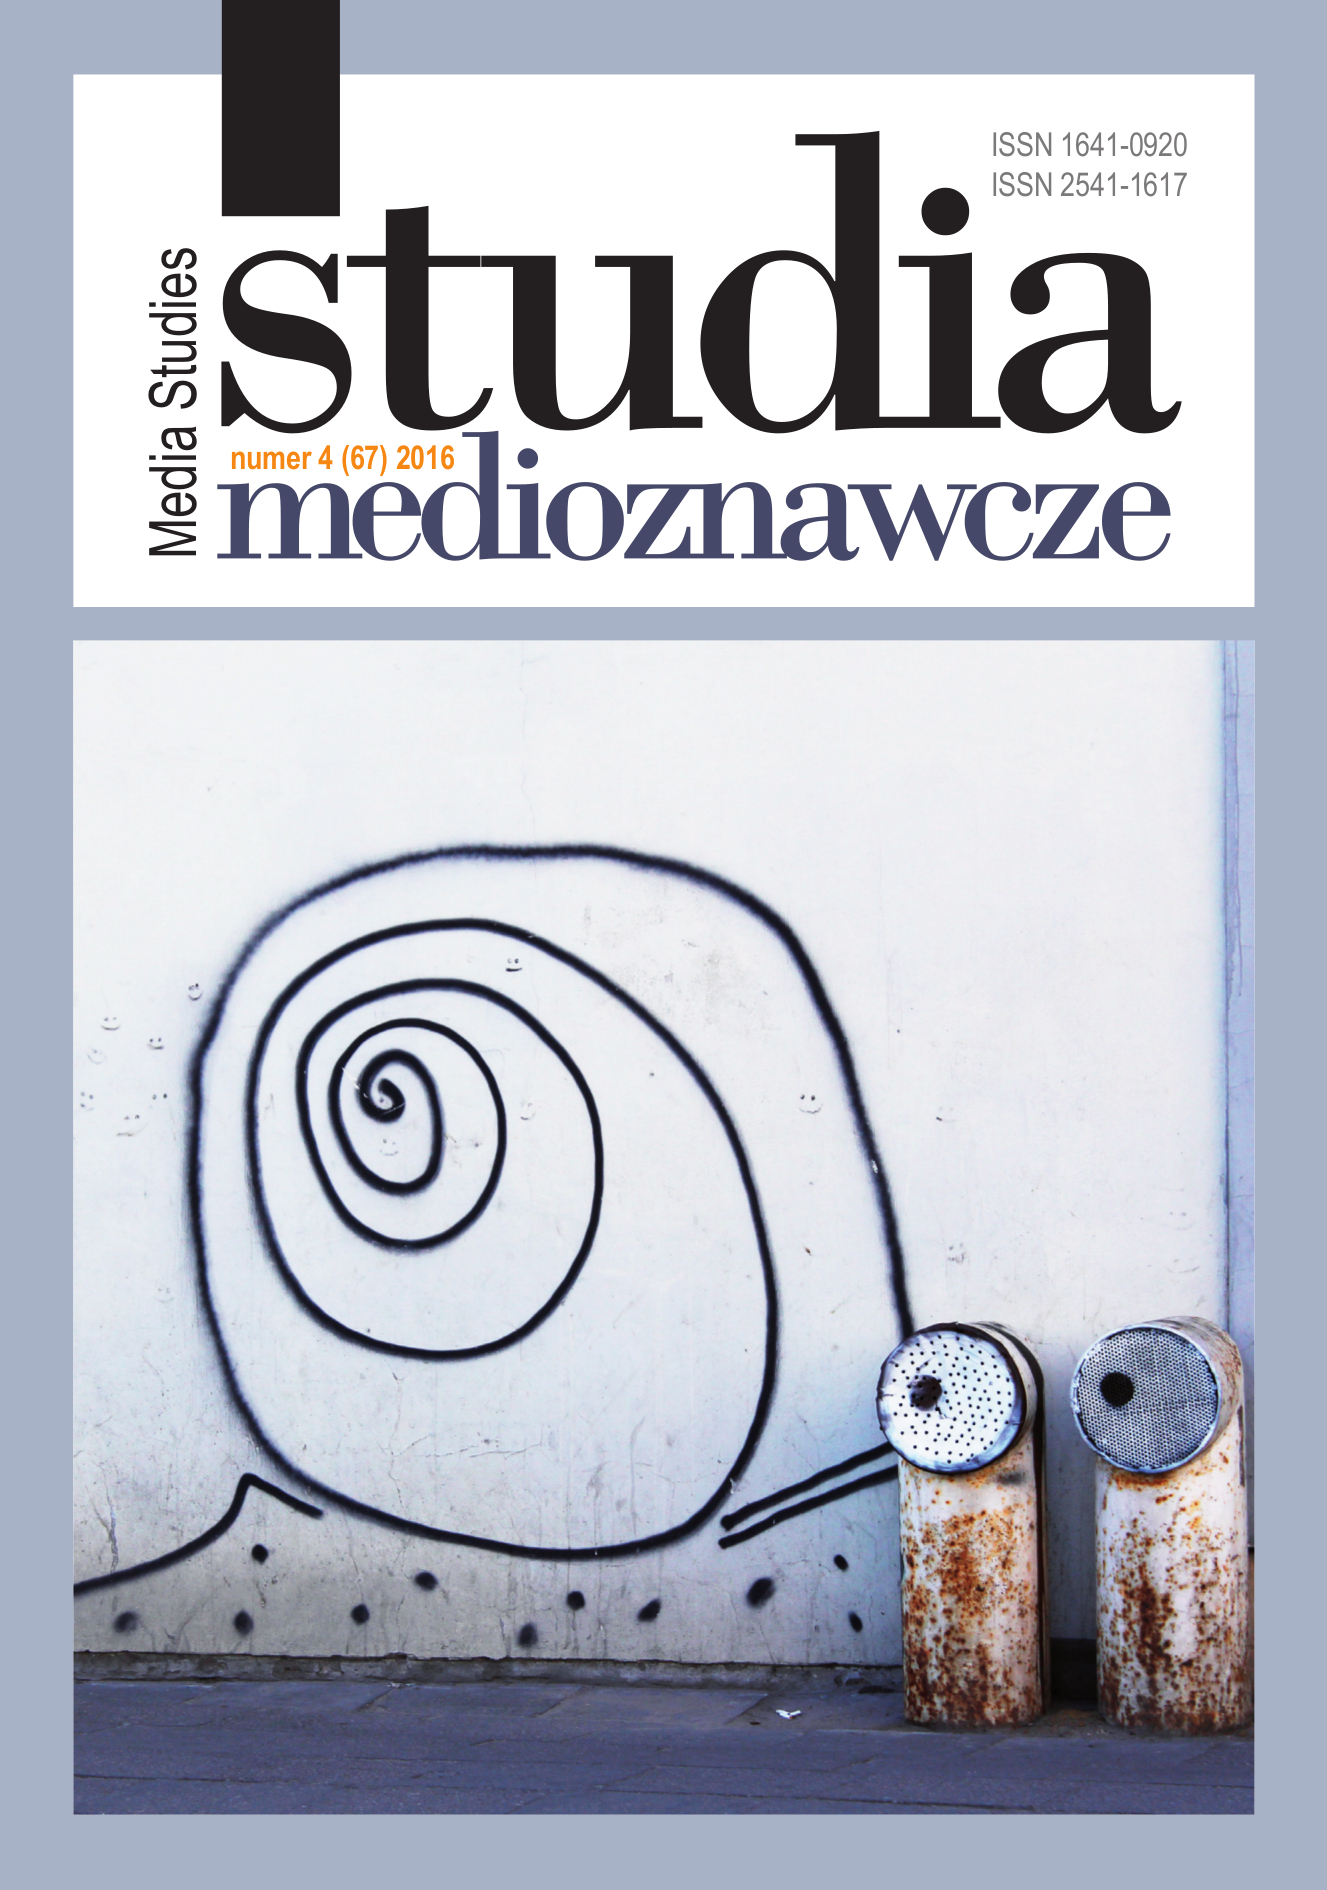 Arkadiusz Kierys
Poland by Jasienica. Biography of publicist Cover Image